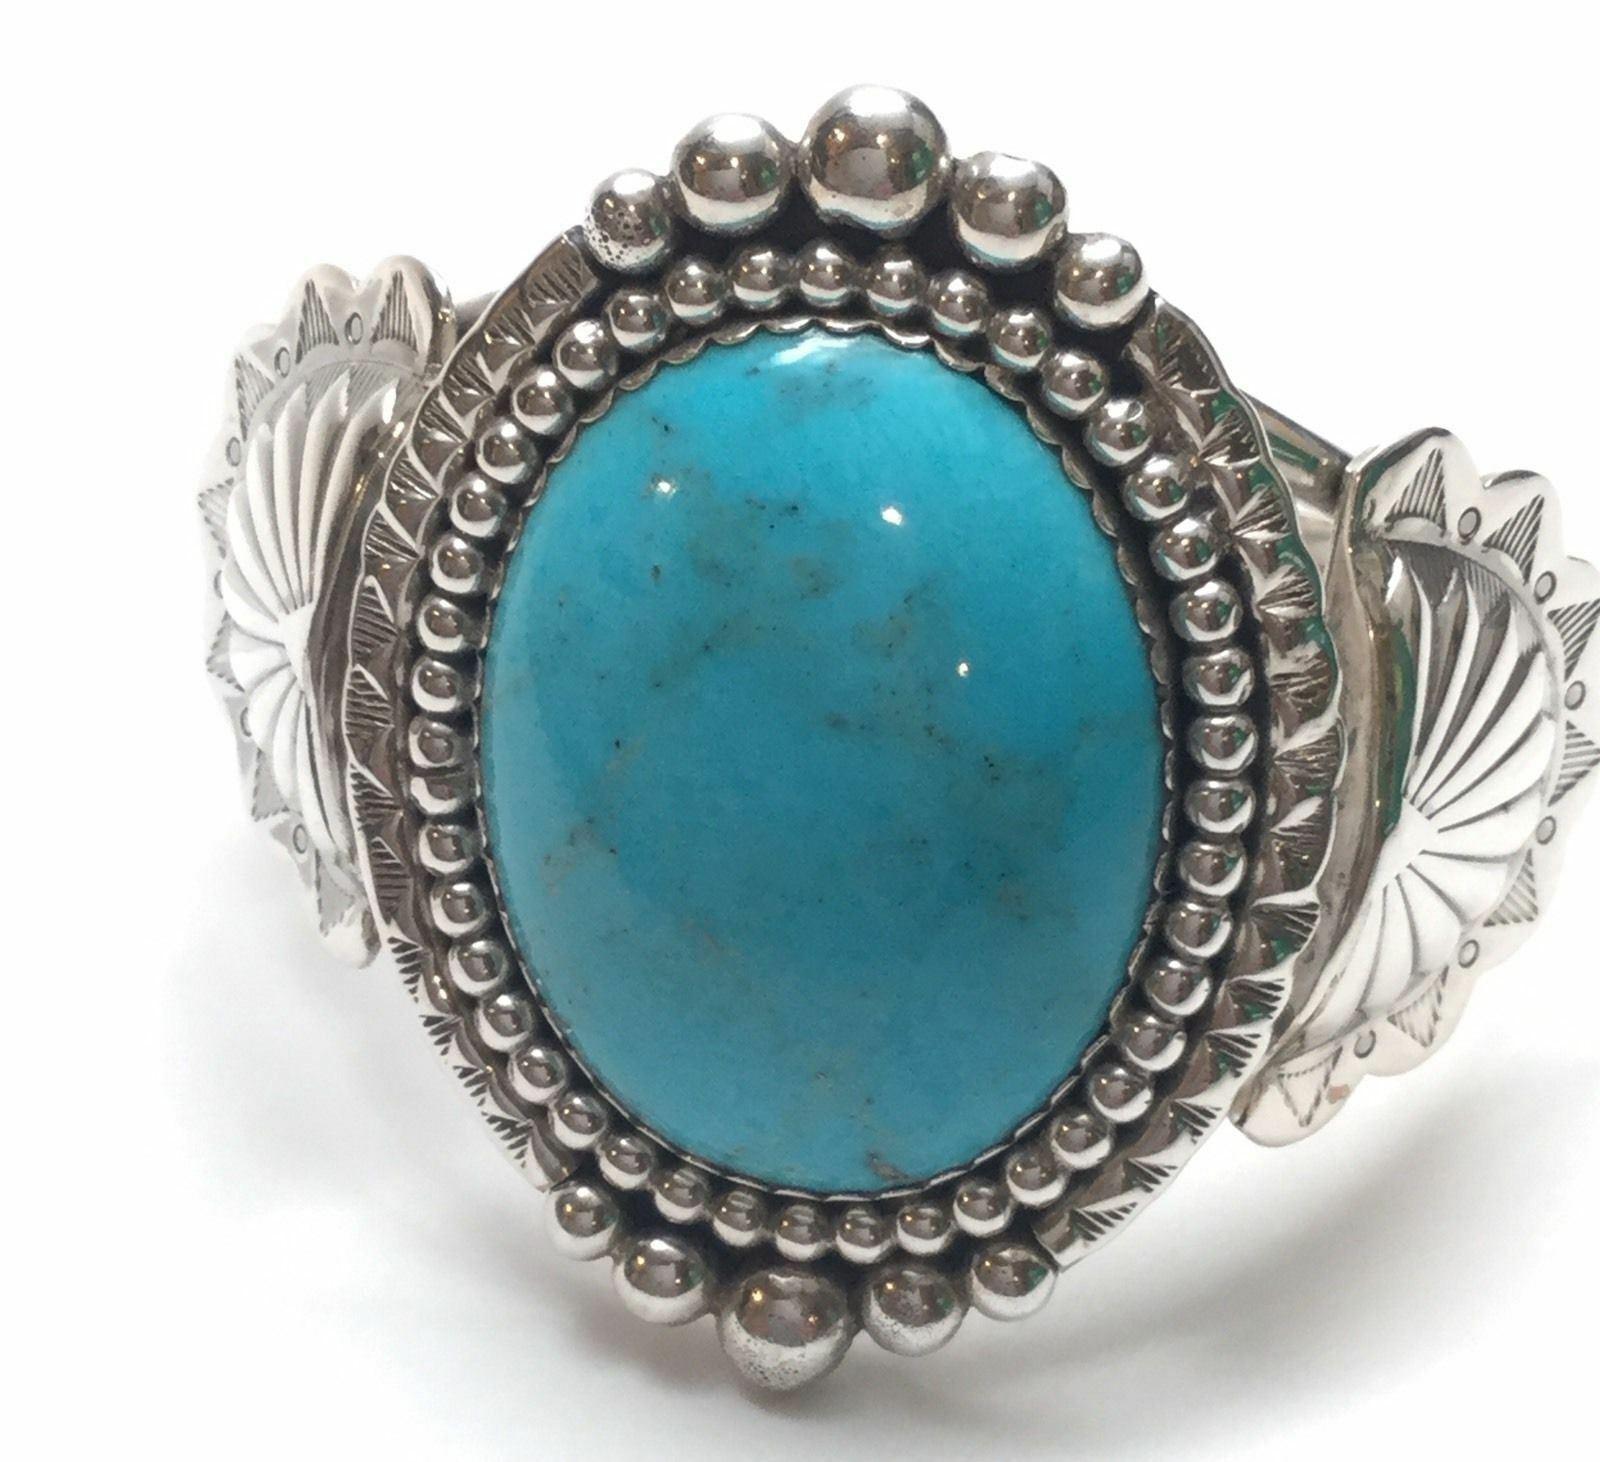 Verna Blackgoat Navajo Native American sterling silver turquoise cuff bracelet.

Marked: V.BLACKGOAT, Sterling, crooked arrow - hallmark.

Measures: 5 5/8